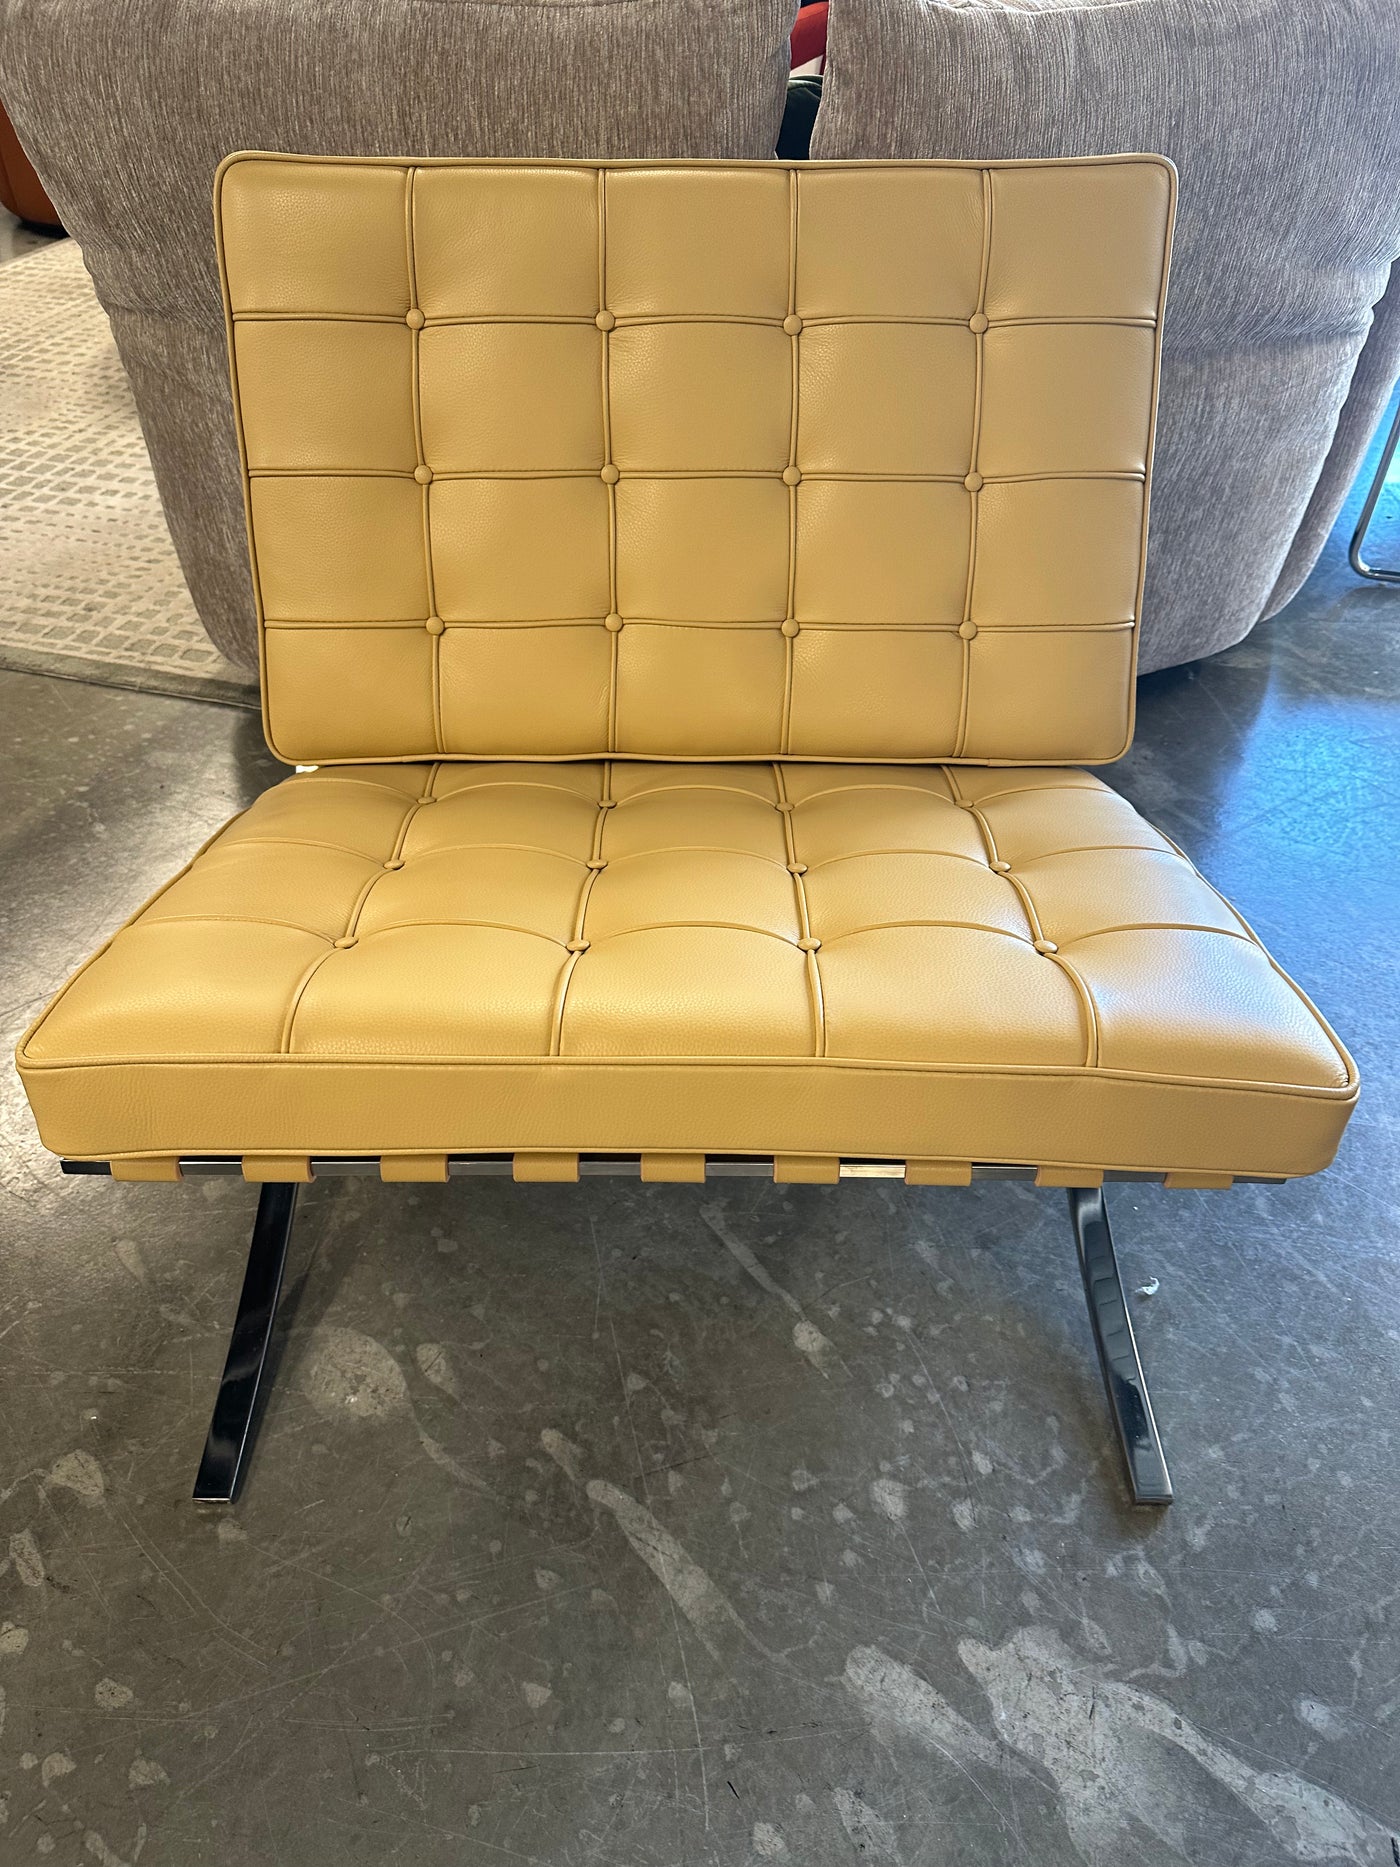 Barcelona Chair (Tan leather)